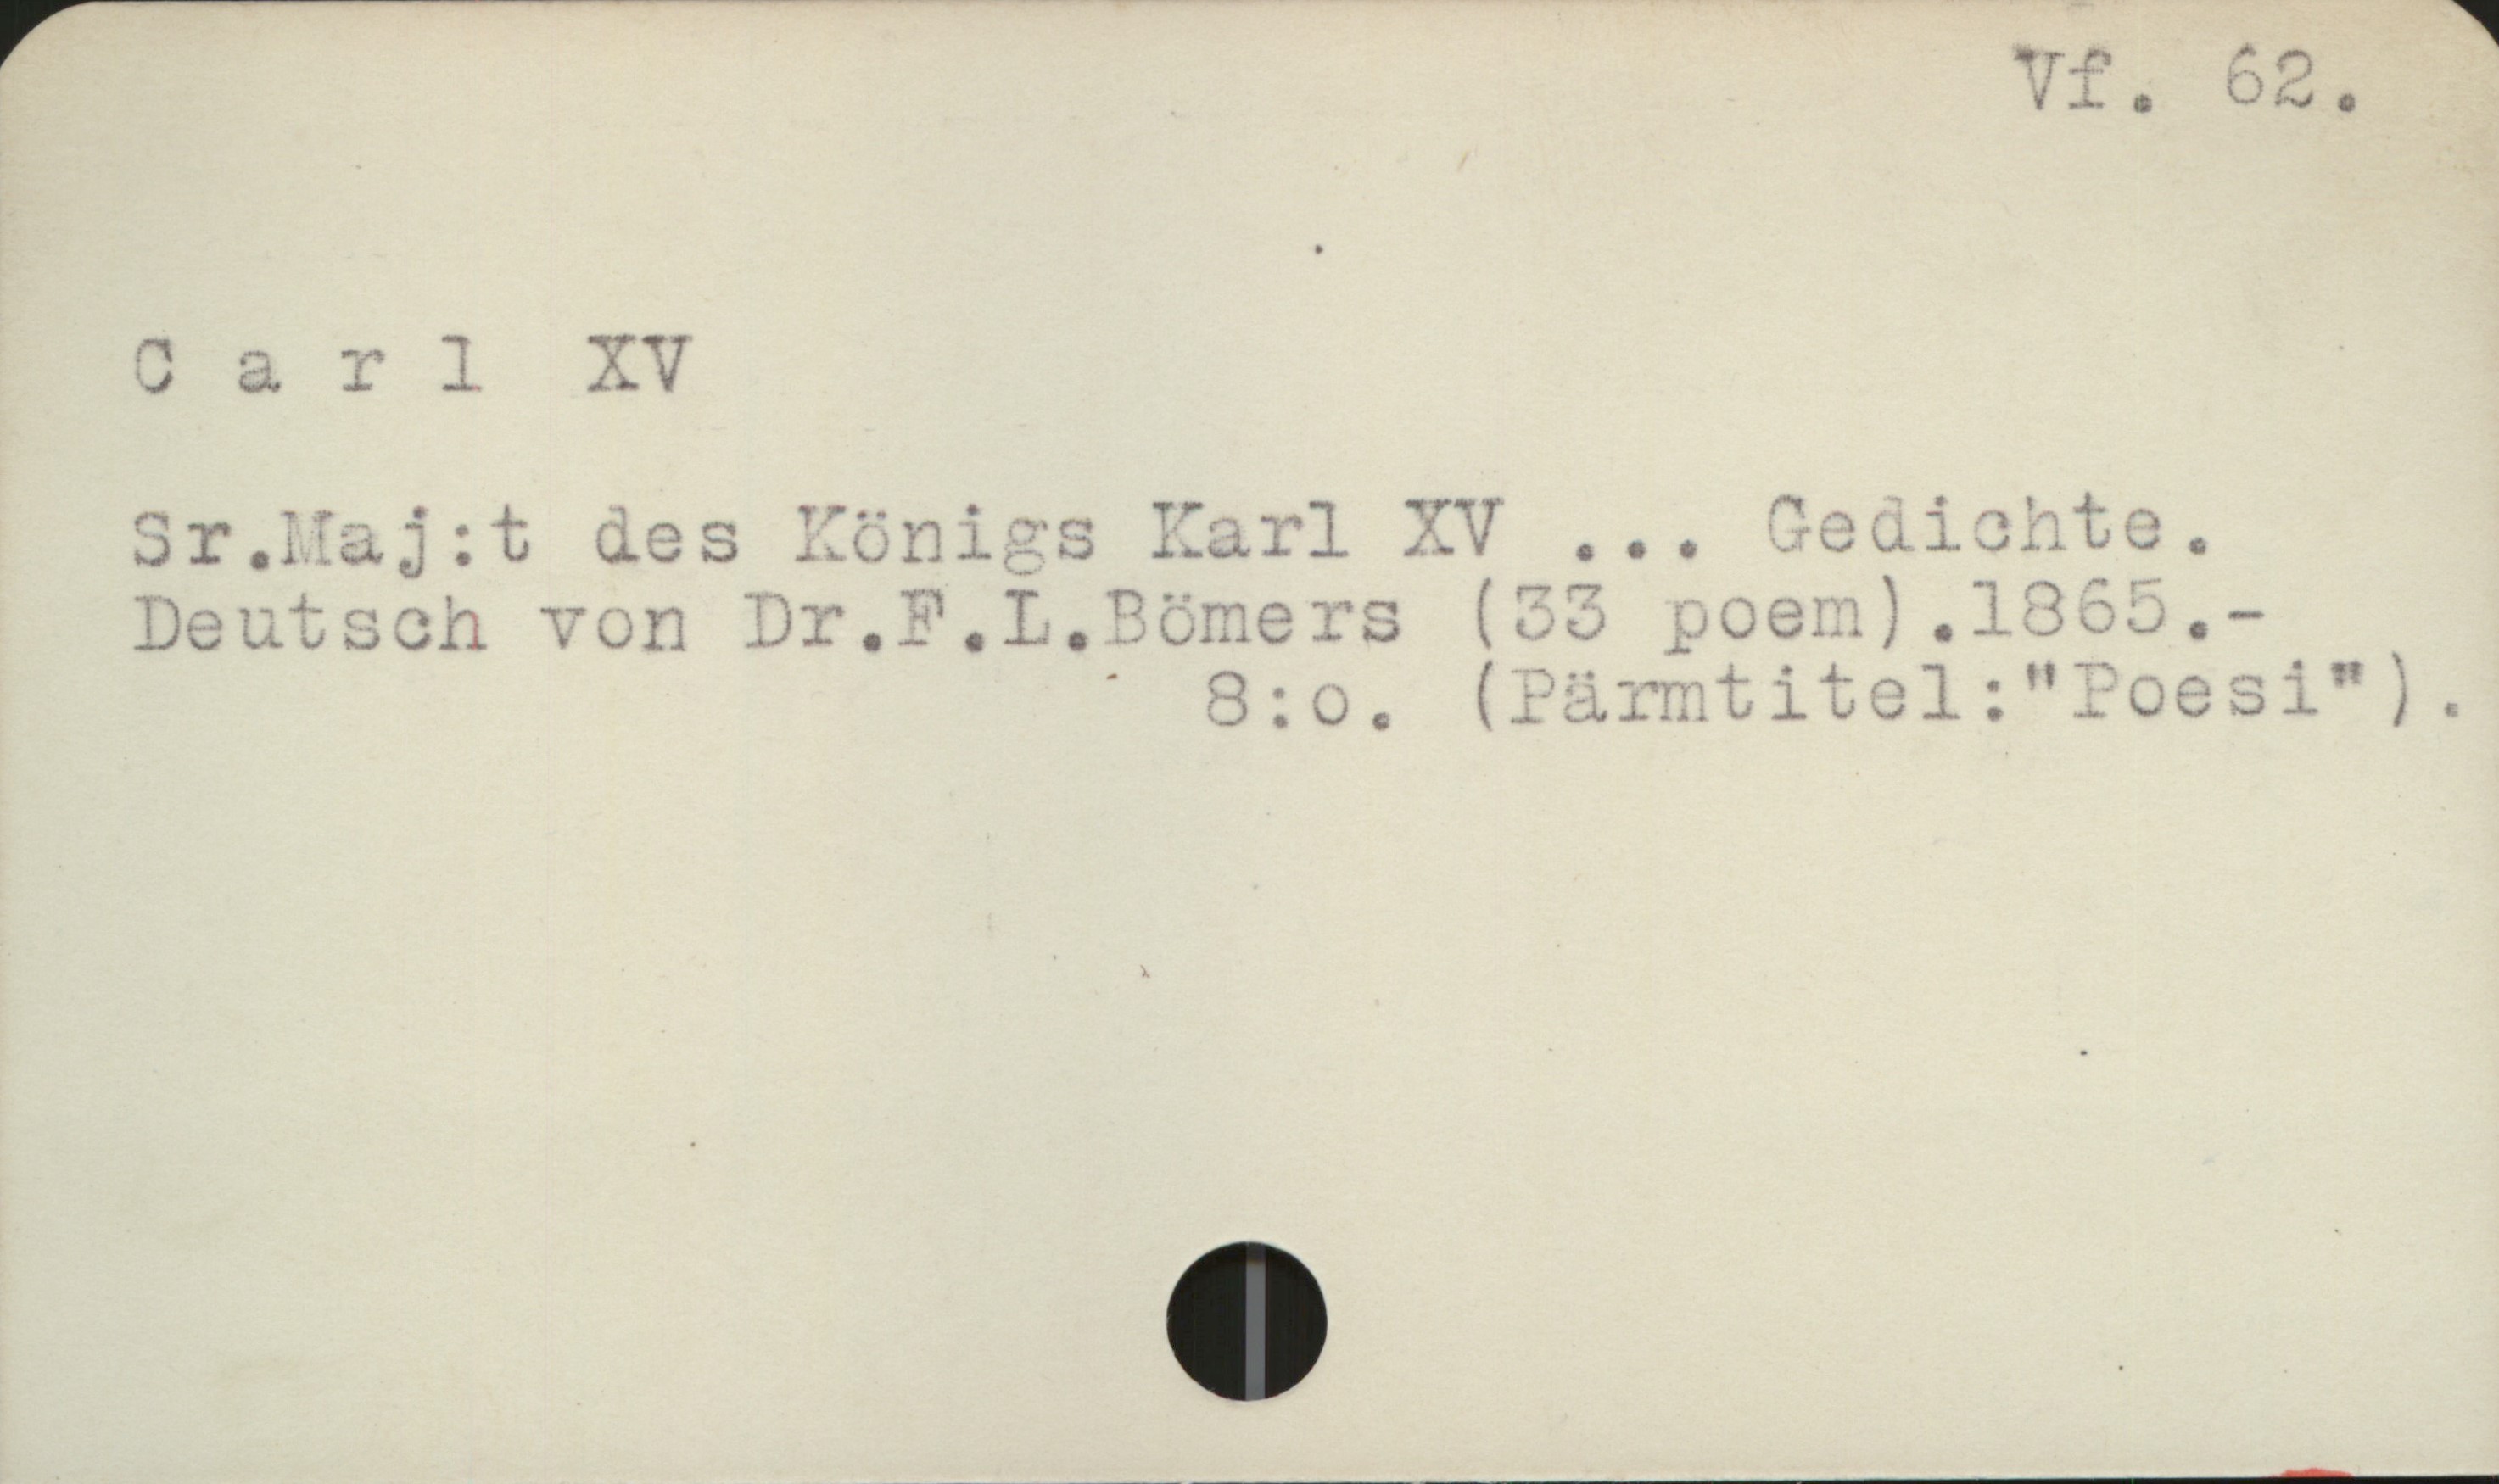  € - n: ^
[ 0 a r 1 XV -
Sr.Maj:t des Königs Karl XV ... Gedichte.
Deutsch von Dr.F.L.Bömers (33 poem).1865.-
i ' 8:o,. (P&rmtitel:"Poesi").

